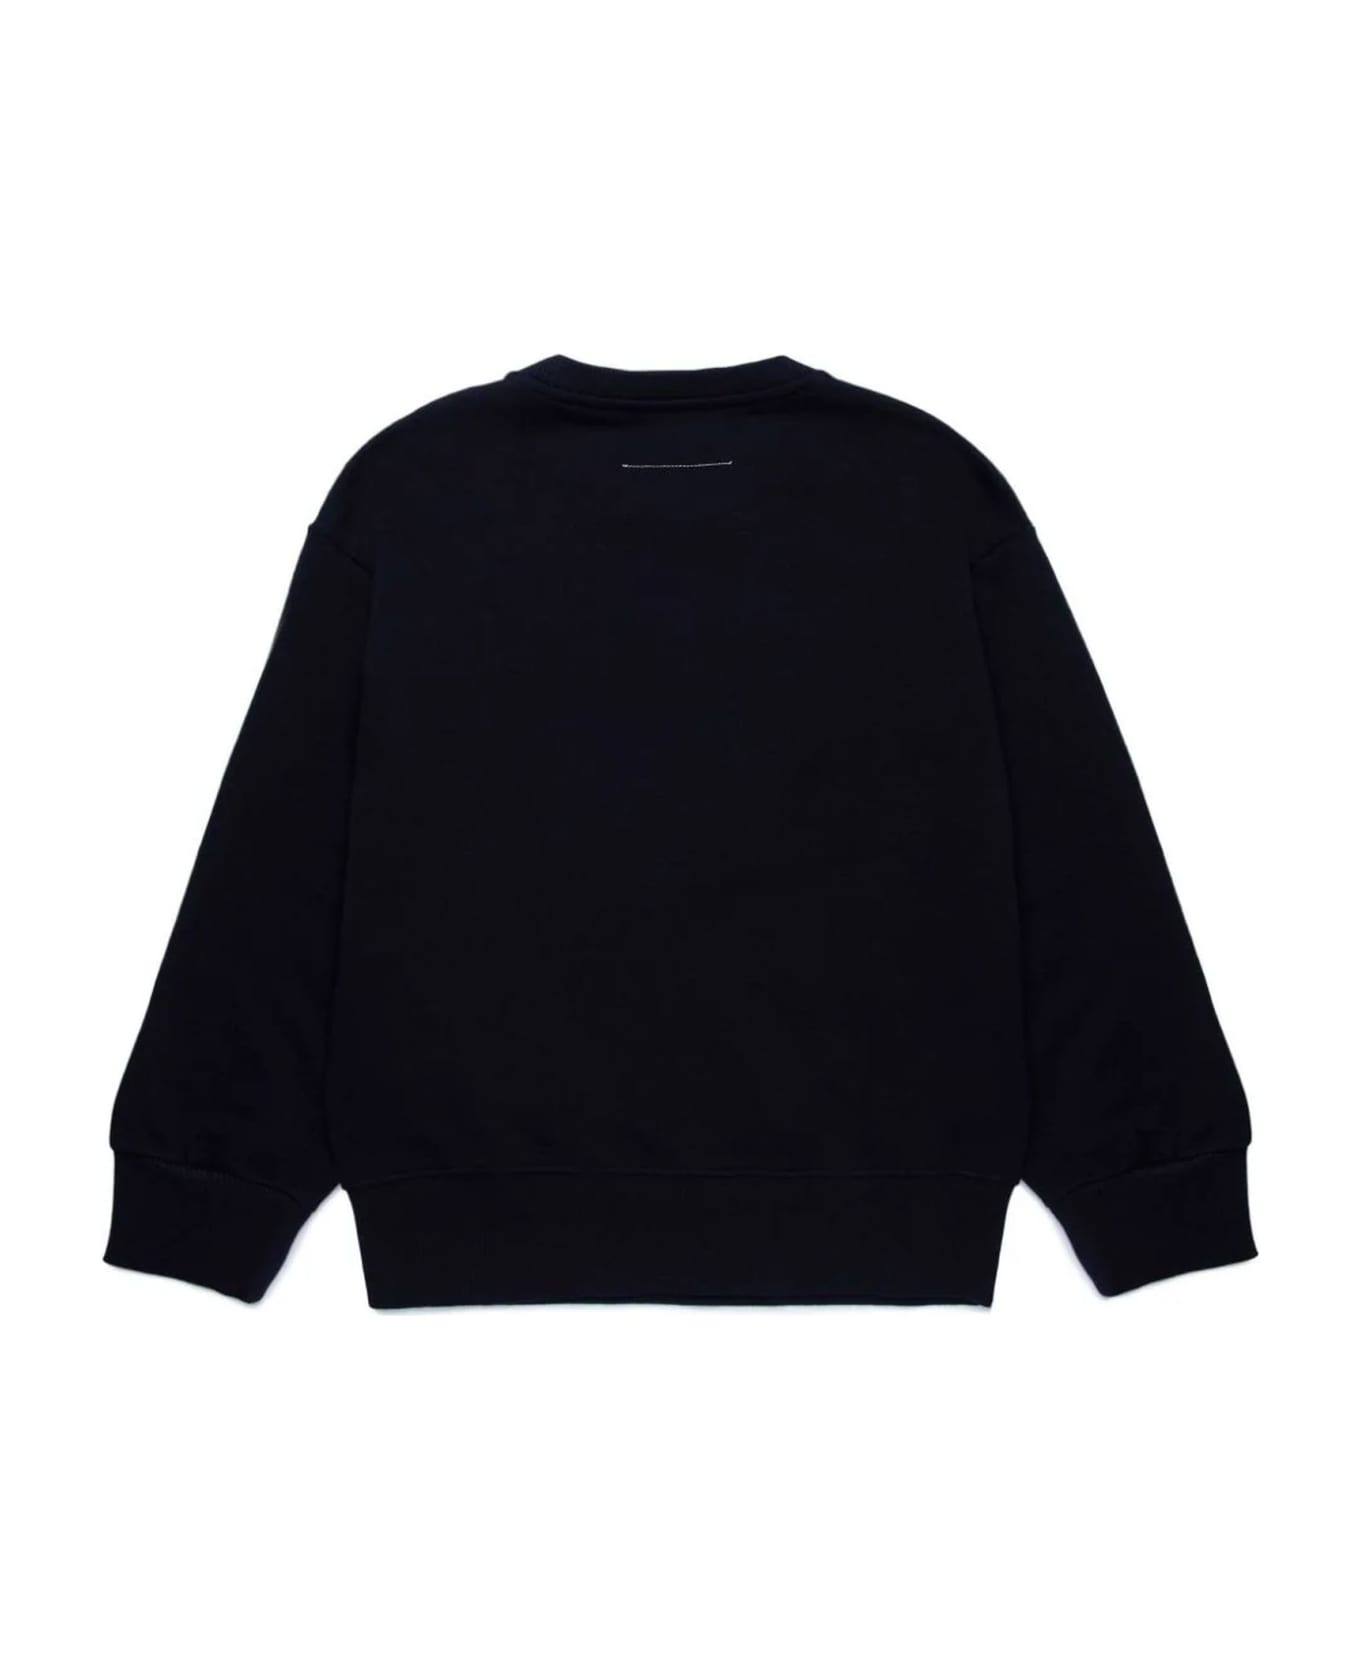 MM6 Maison Margiela Black Cotton Sweatshirt - Nero